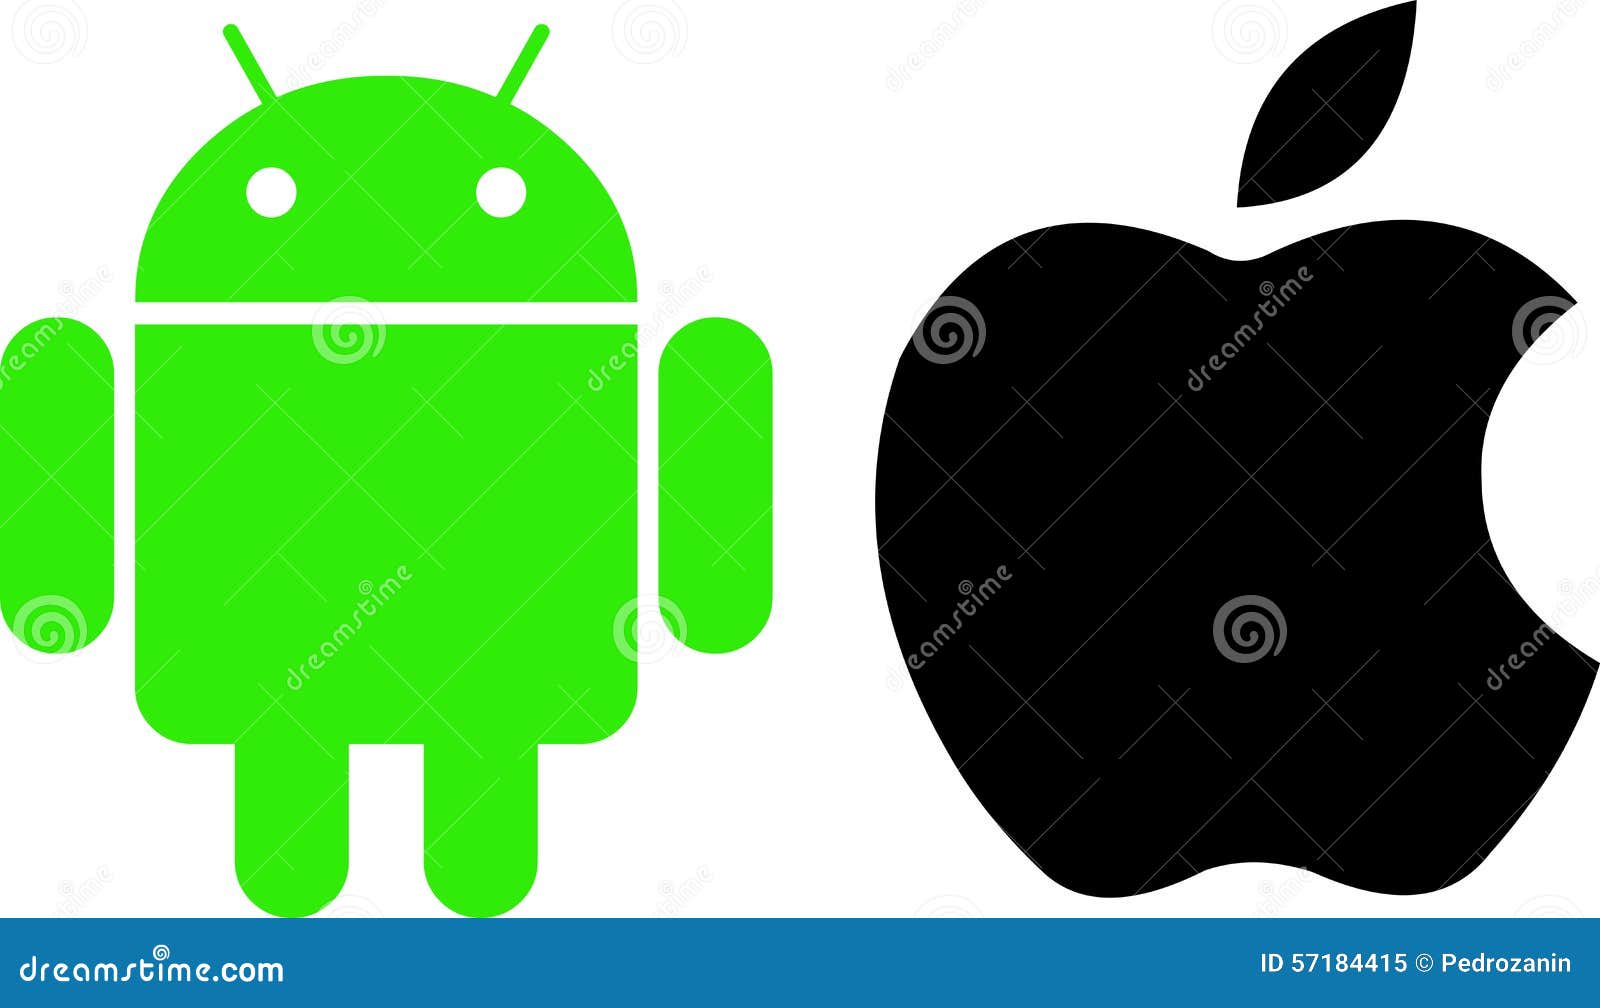 Apple Vs Android Logo